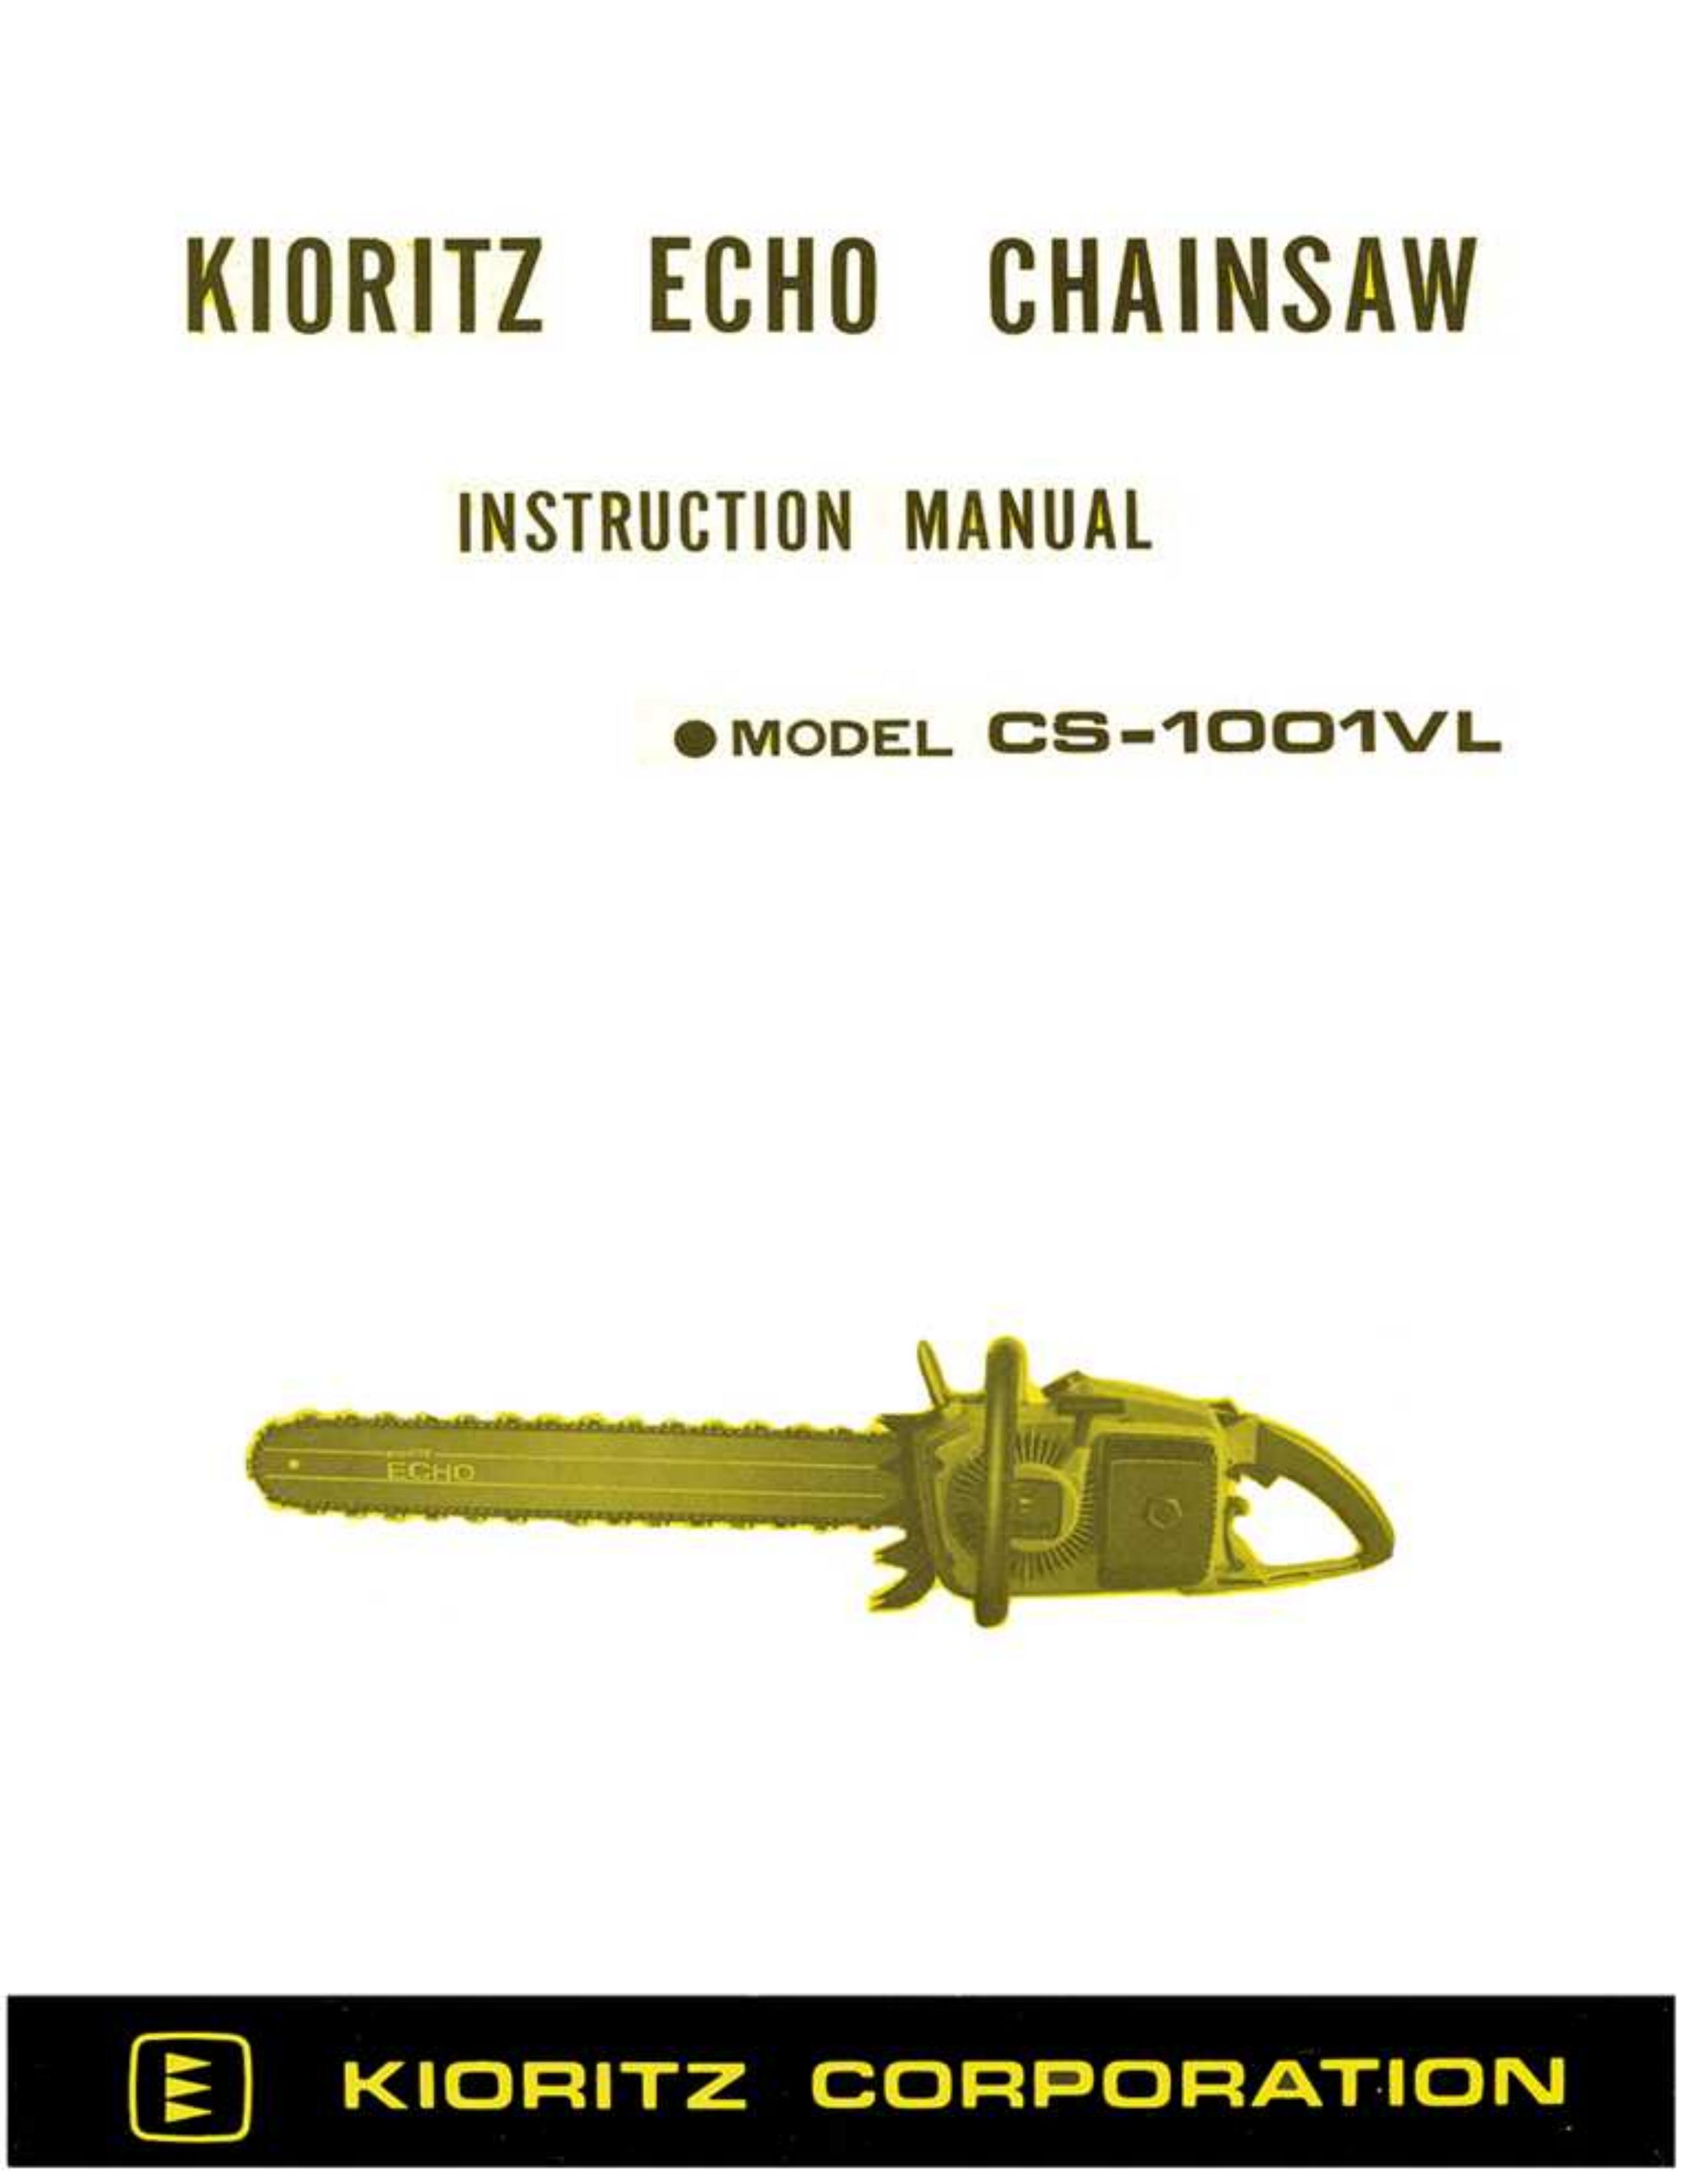 Echo CS-1001VL Chainsaw User Manual